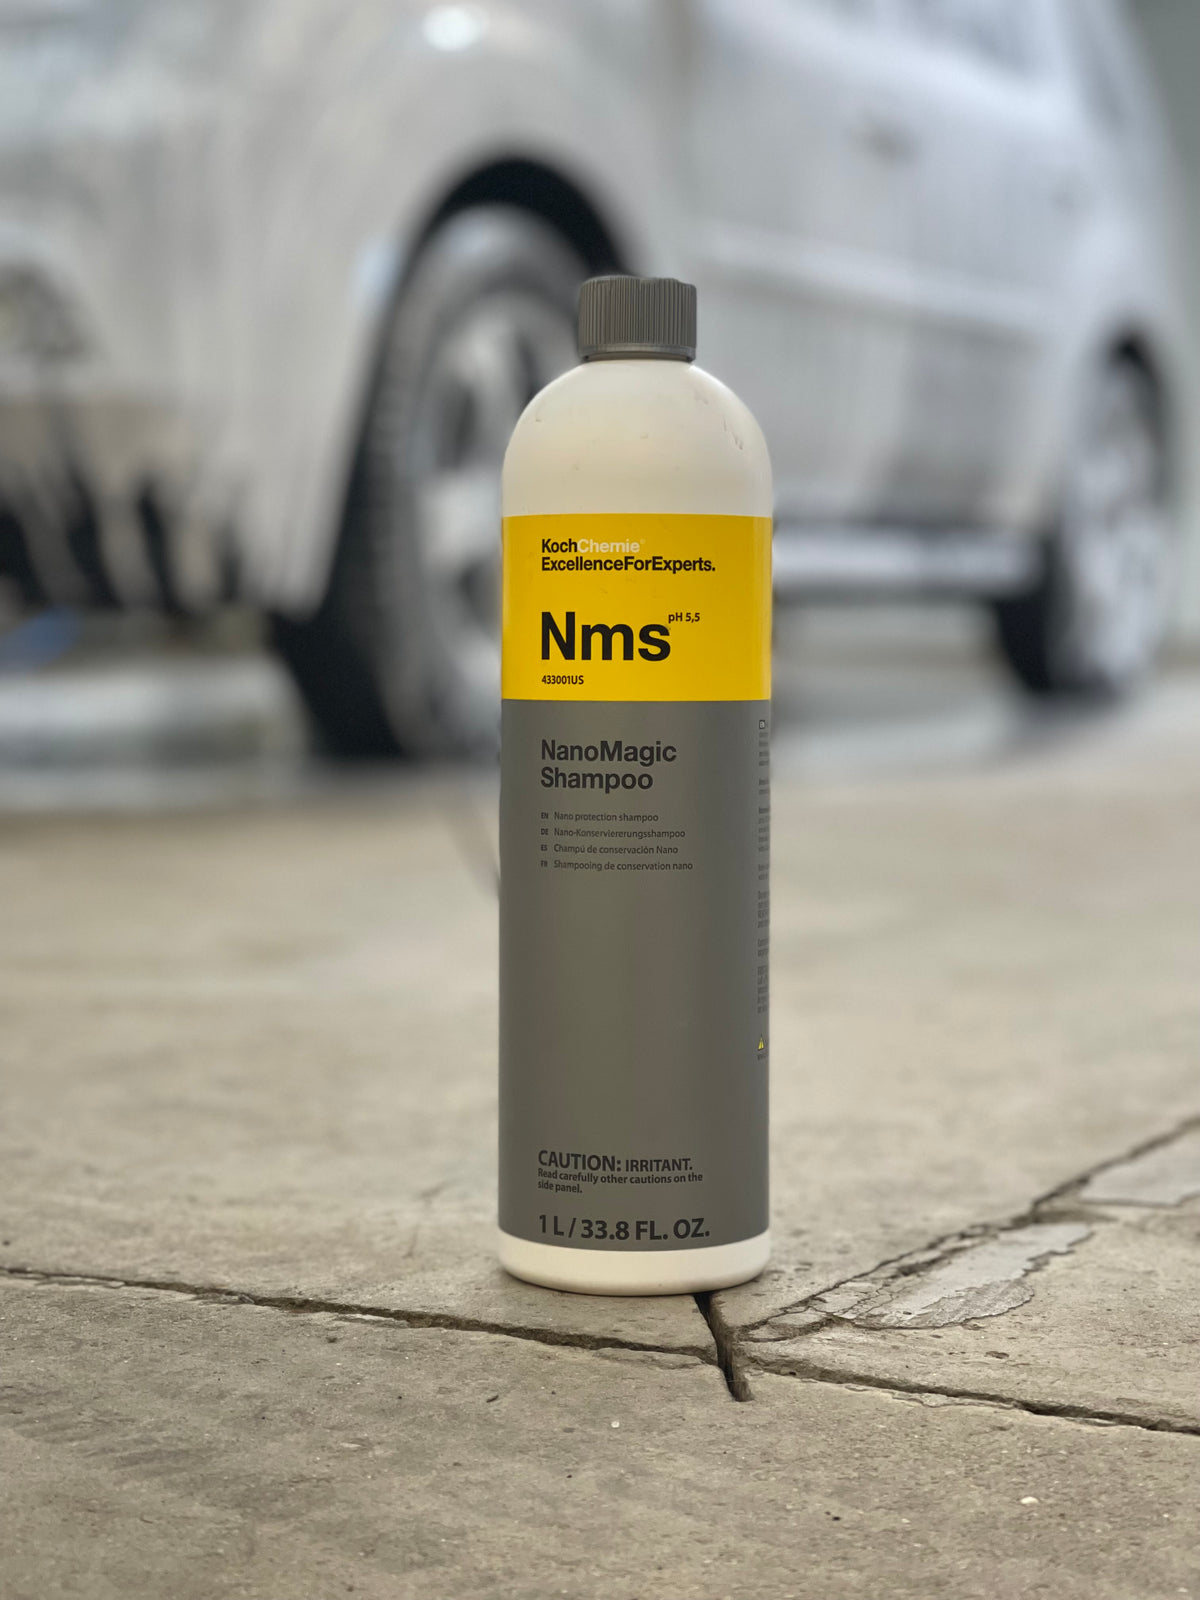 Nms - Nano Magic Shampoo